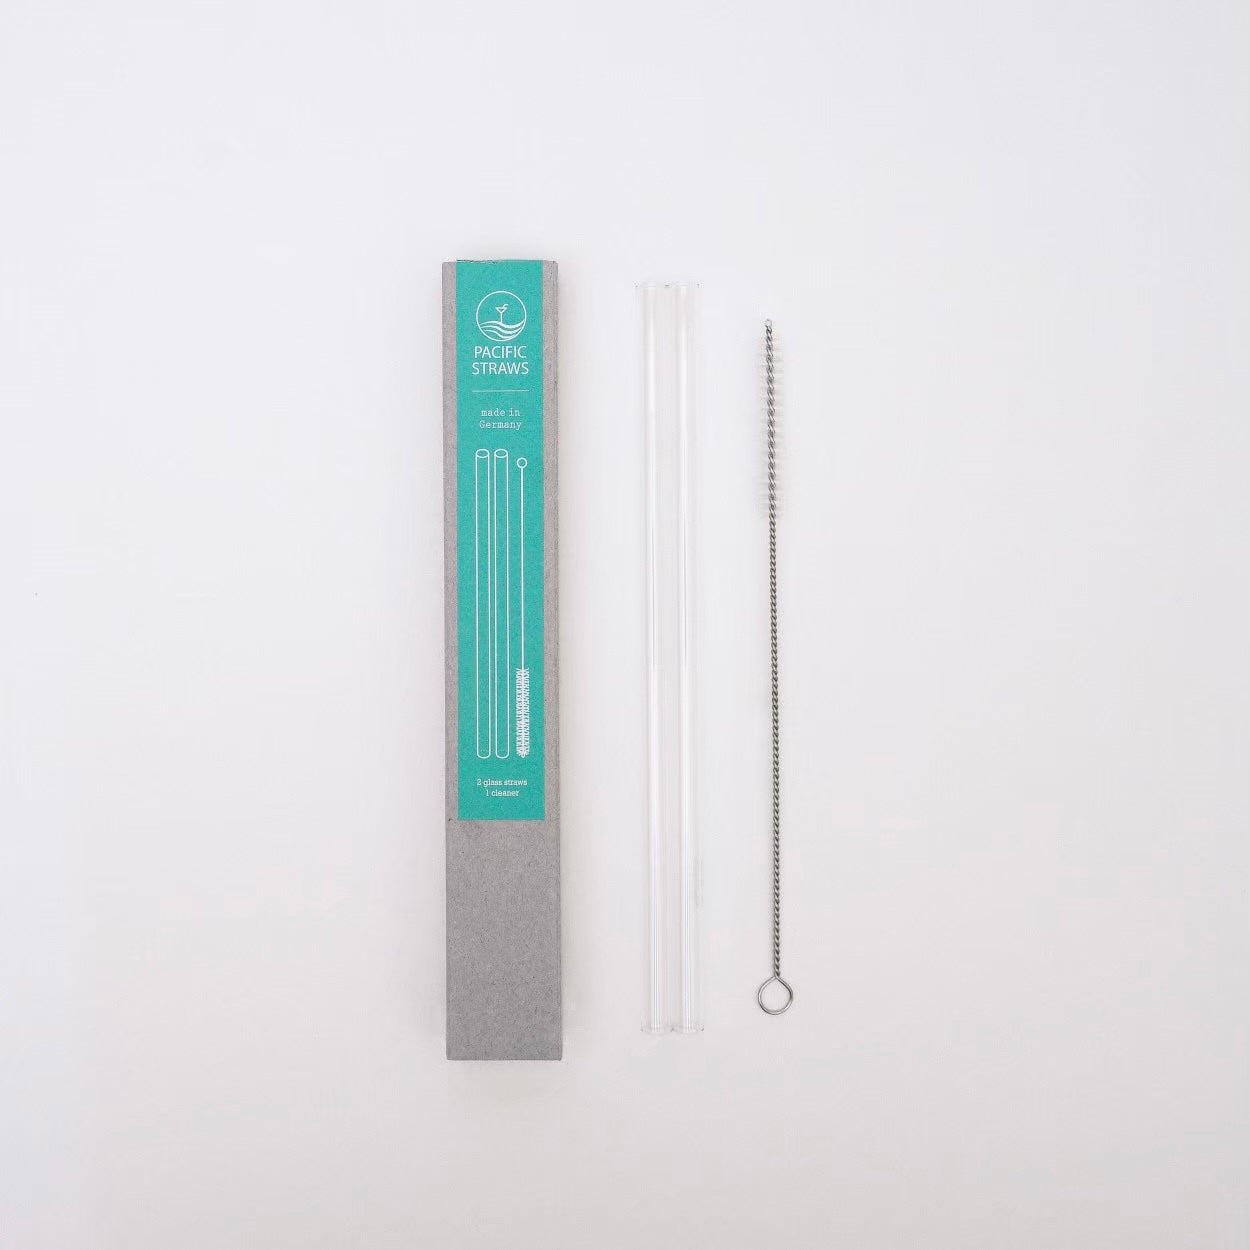 Glass straw / long